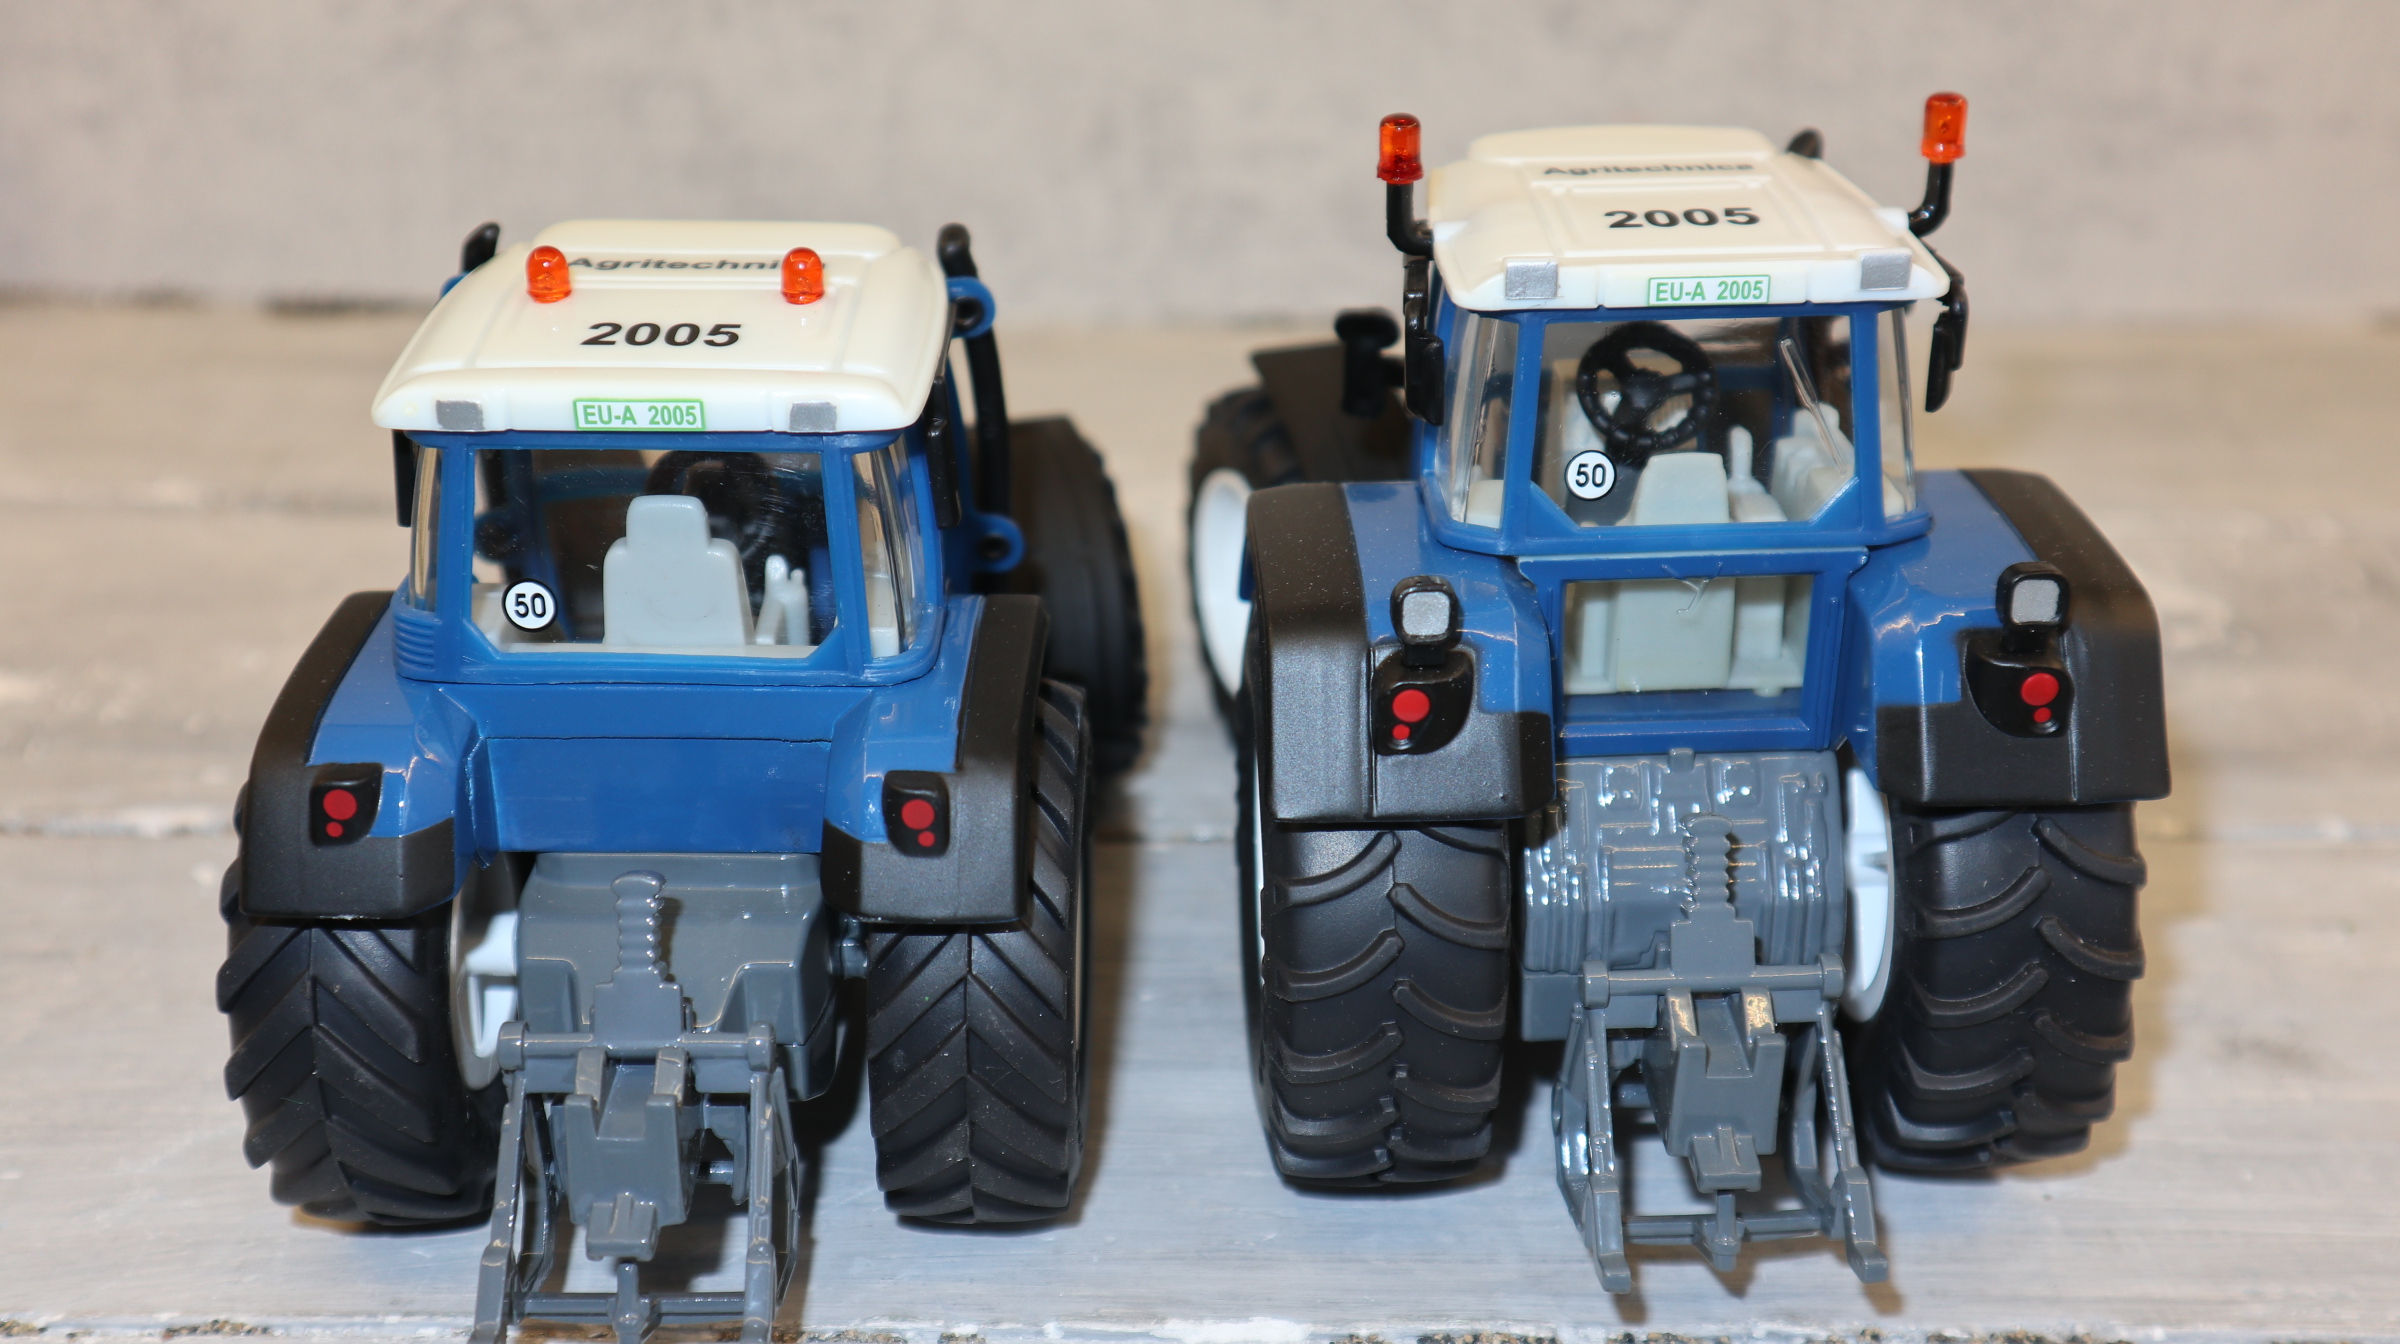 Siku Traktoren-Set in 1:32, Fendt 712 & Fendt 920 in BLAU, Agritechnica 2005,  NEU in OVP